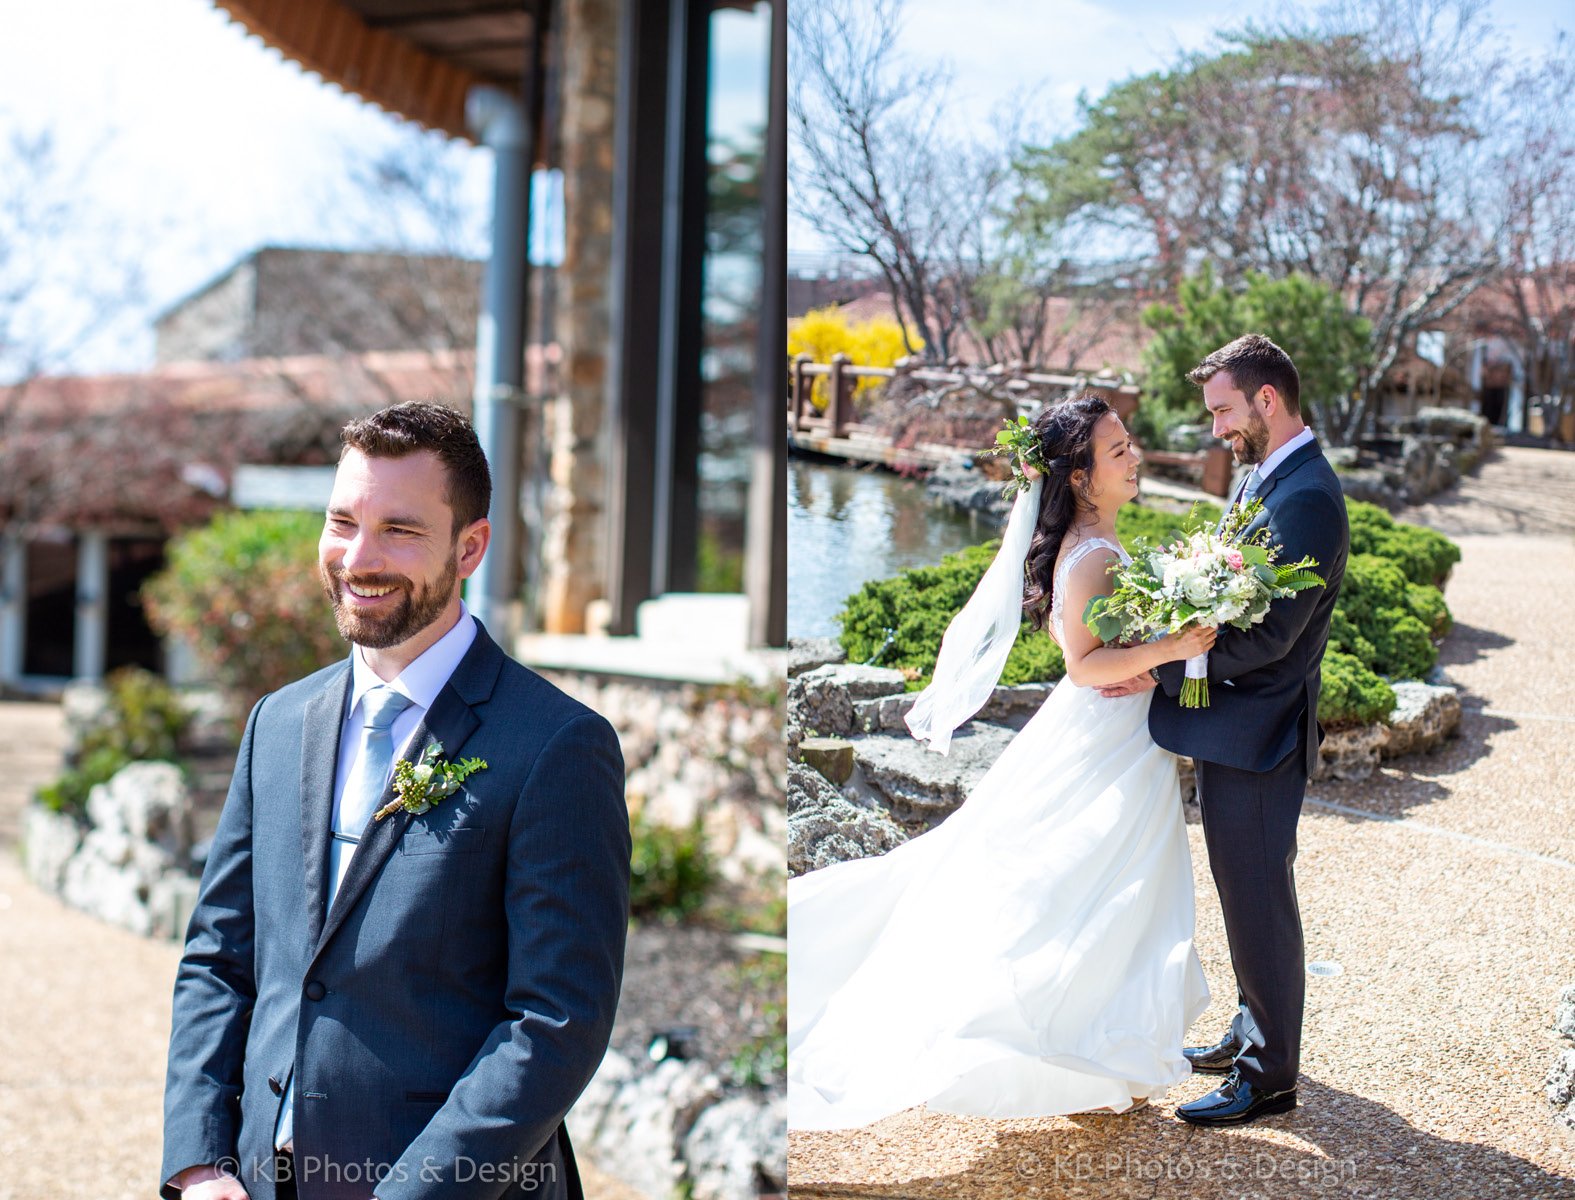 Wedding-Destination-Photography-Lake-of-the-Ozarks-Missouri-Wade-Natsuko-Jefferson-City-bride-groom-Lodge-of-Four-Seasons-wedding-photographer-KB-Photos-and-Design-201.jpg